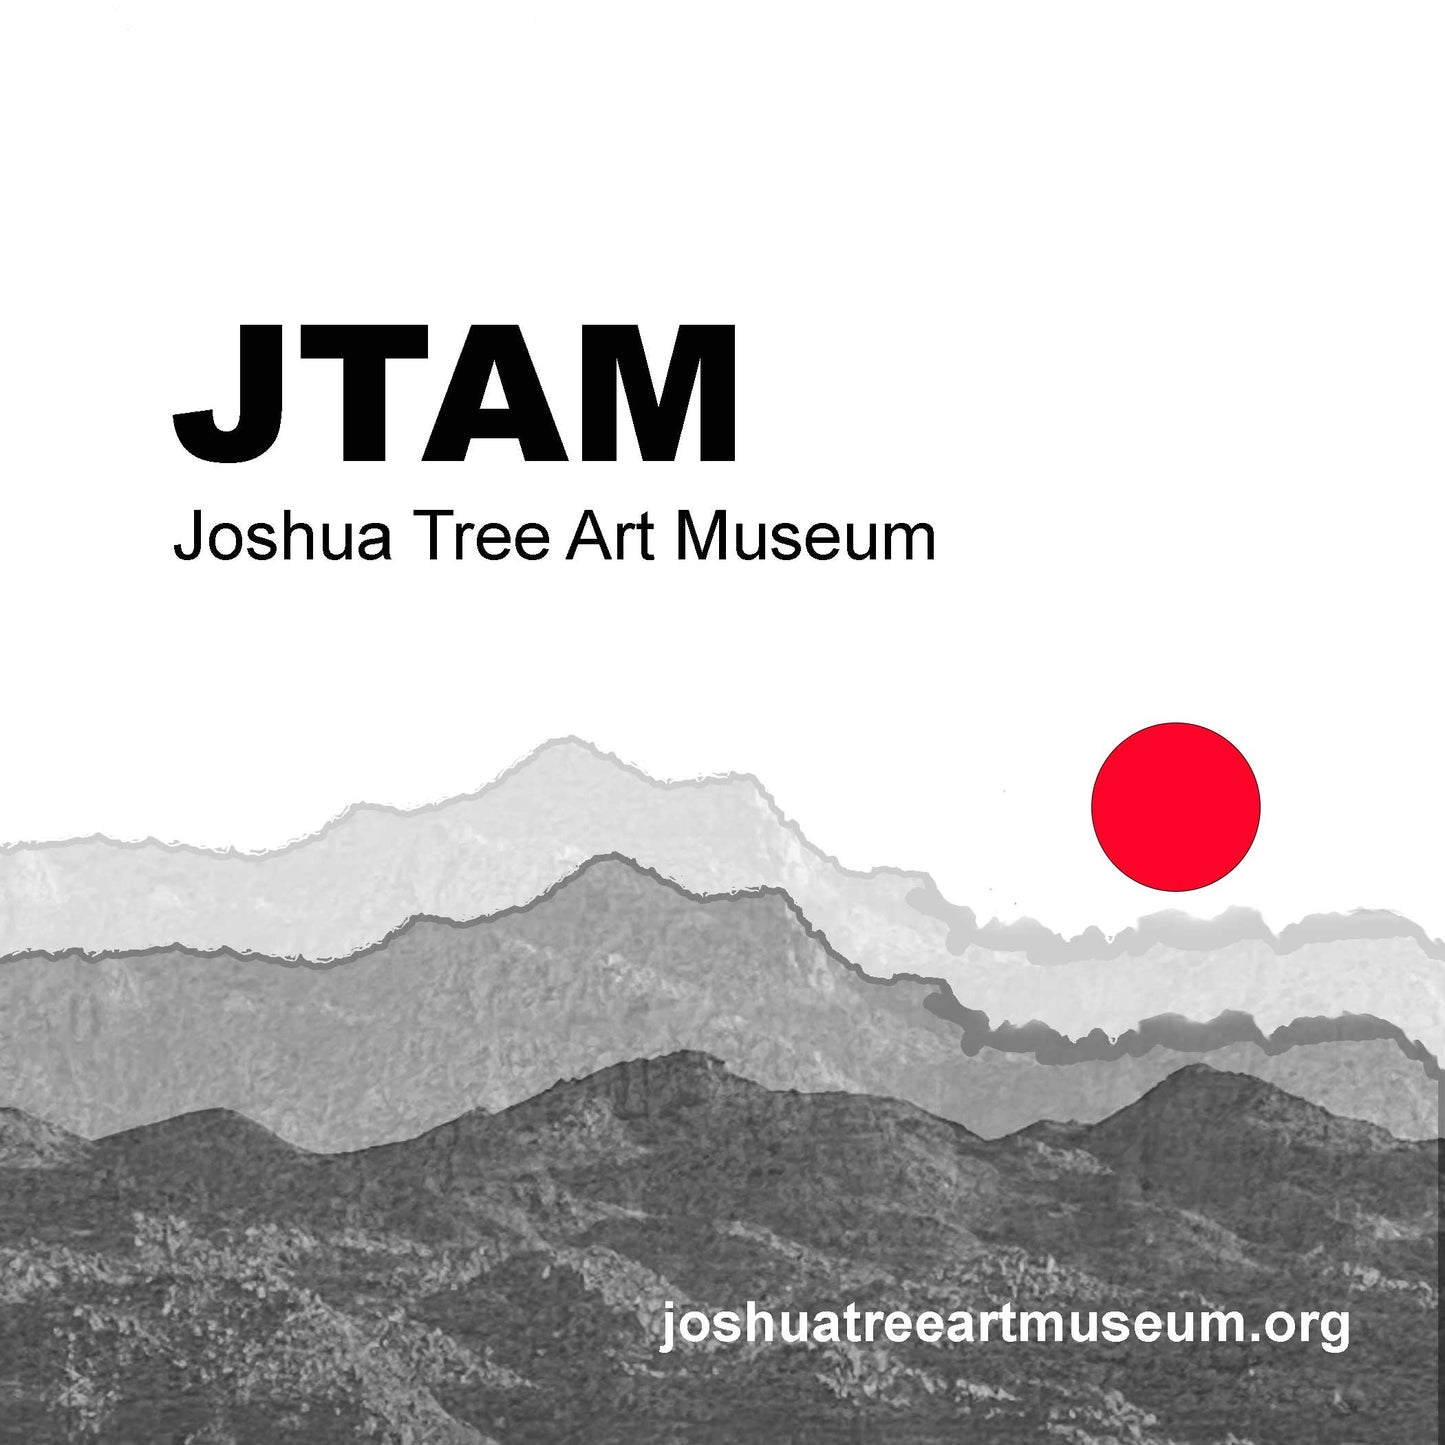 JTAM Joshua Tree Art Museum 3"X3" holographic sticker